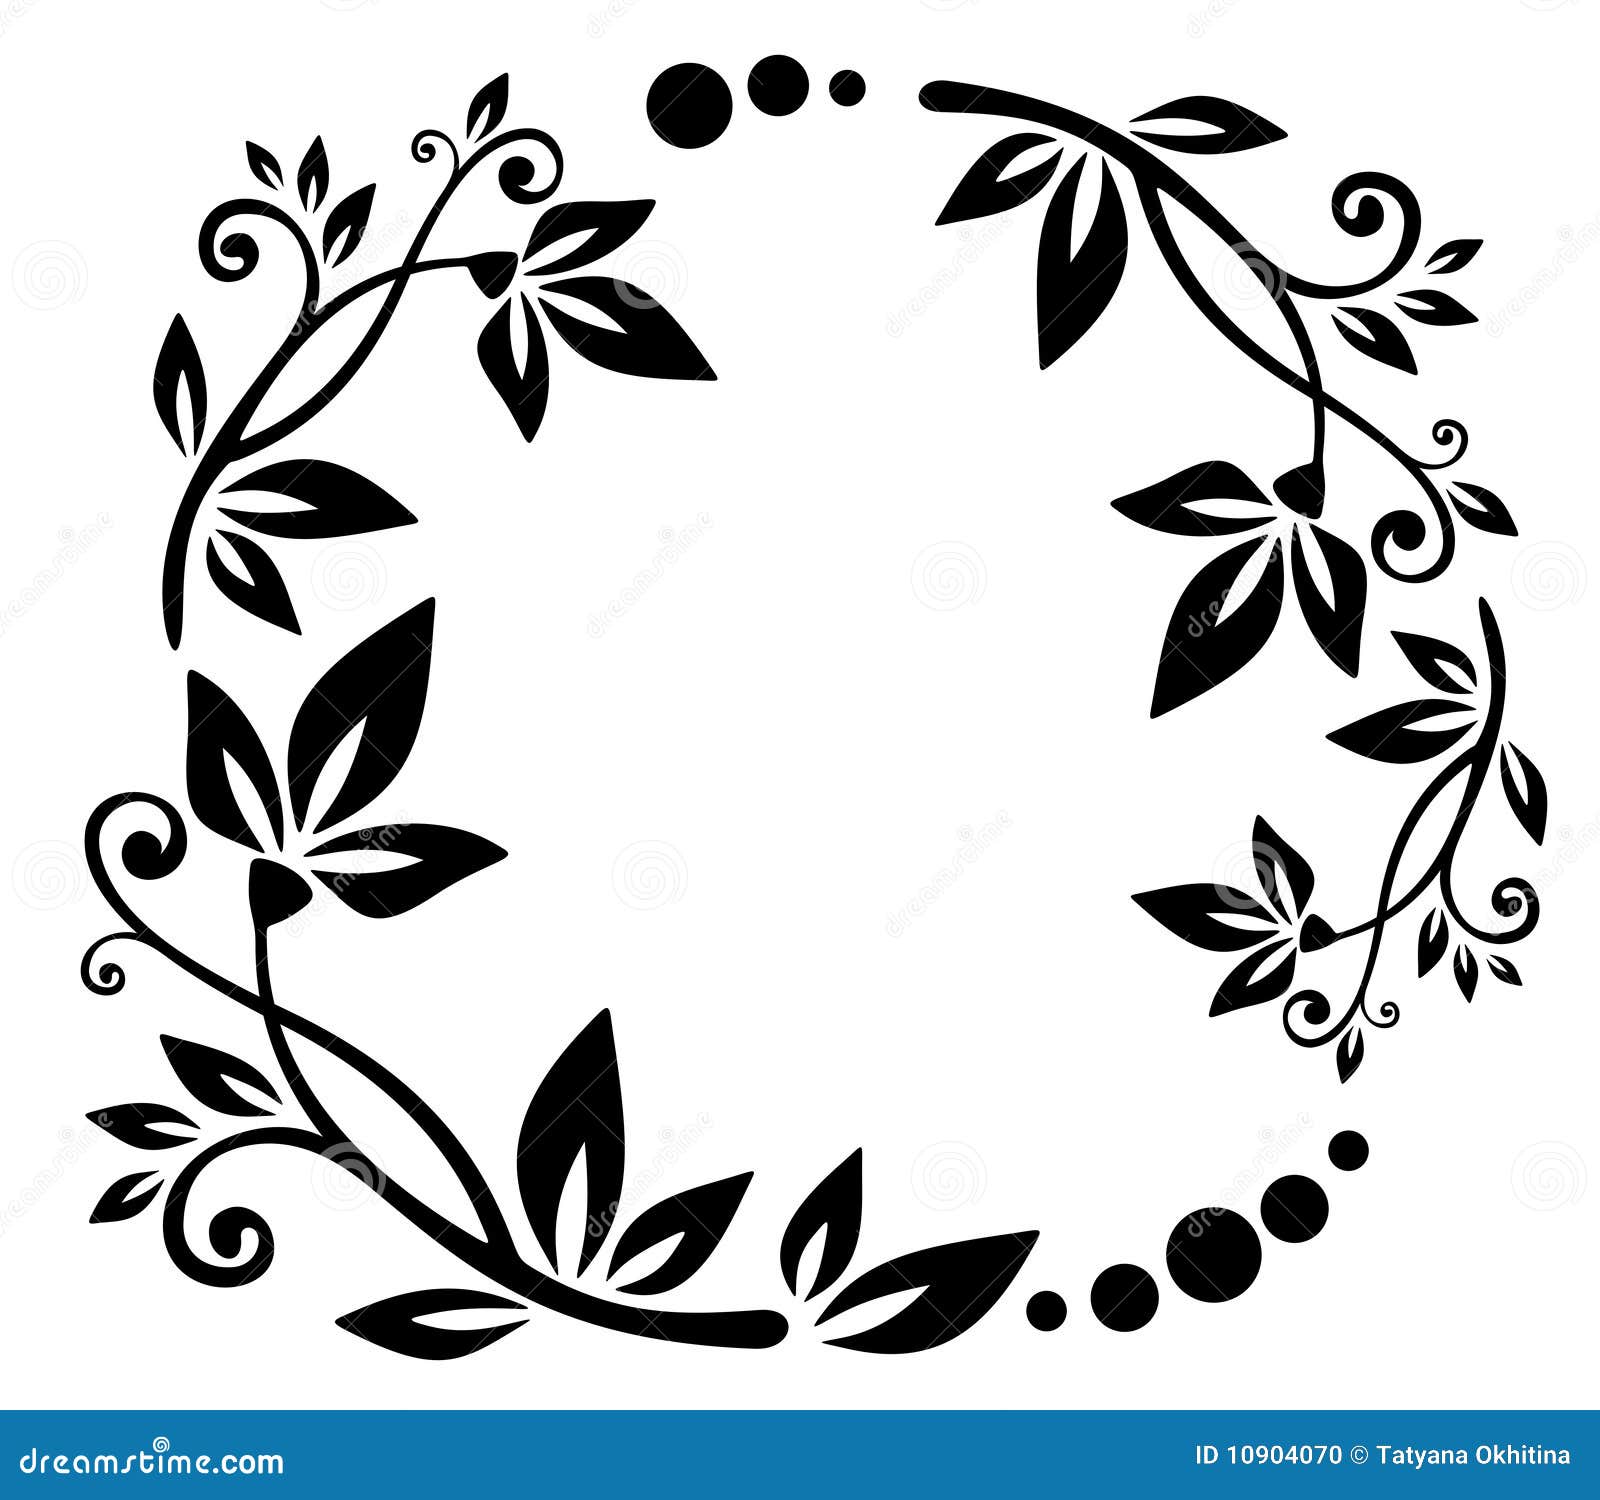 Floral border stock vector. Illustration of ornate, pattern - 10904070